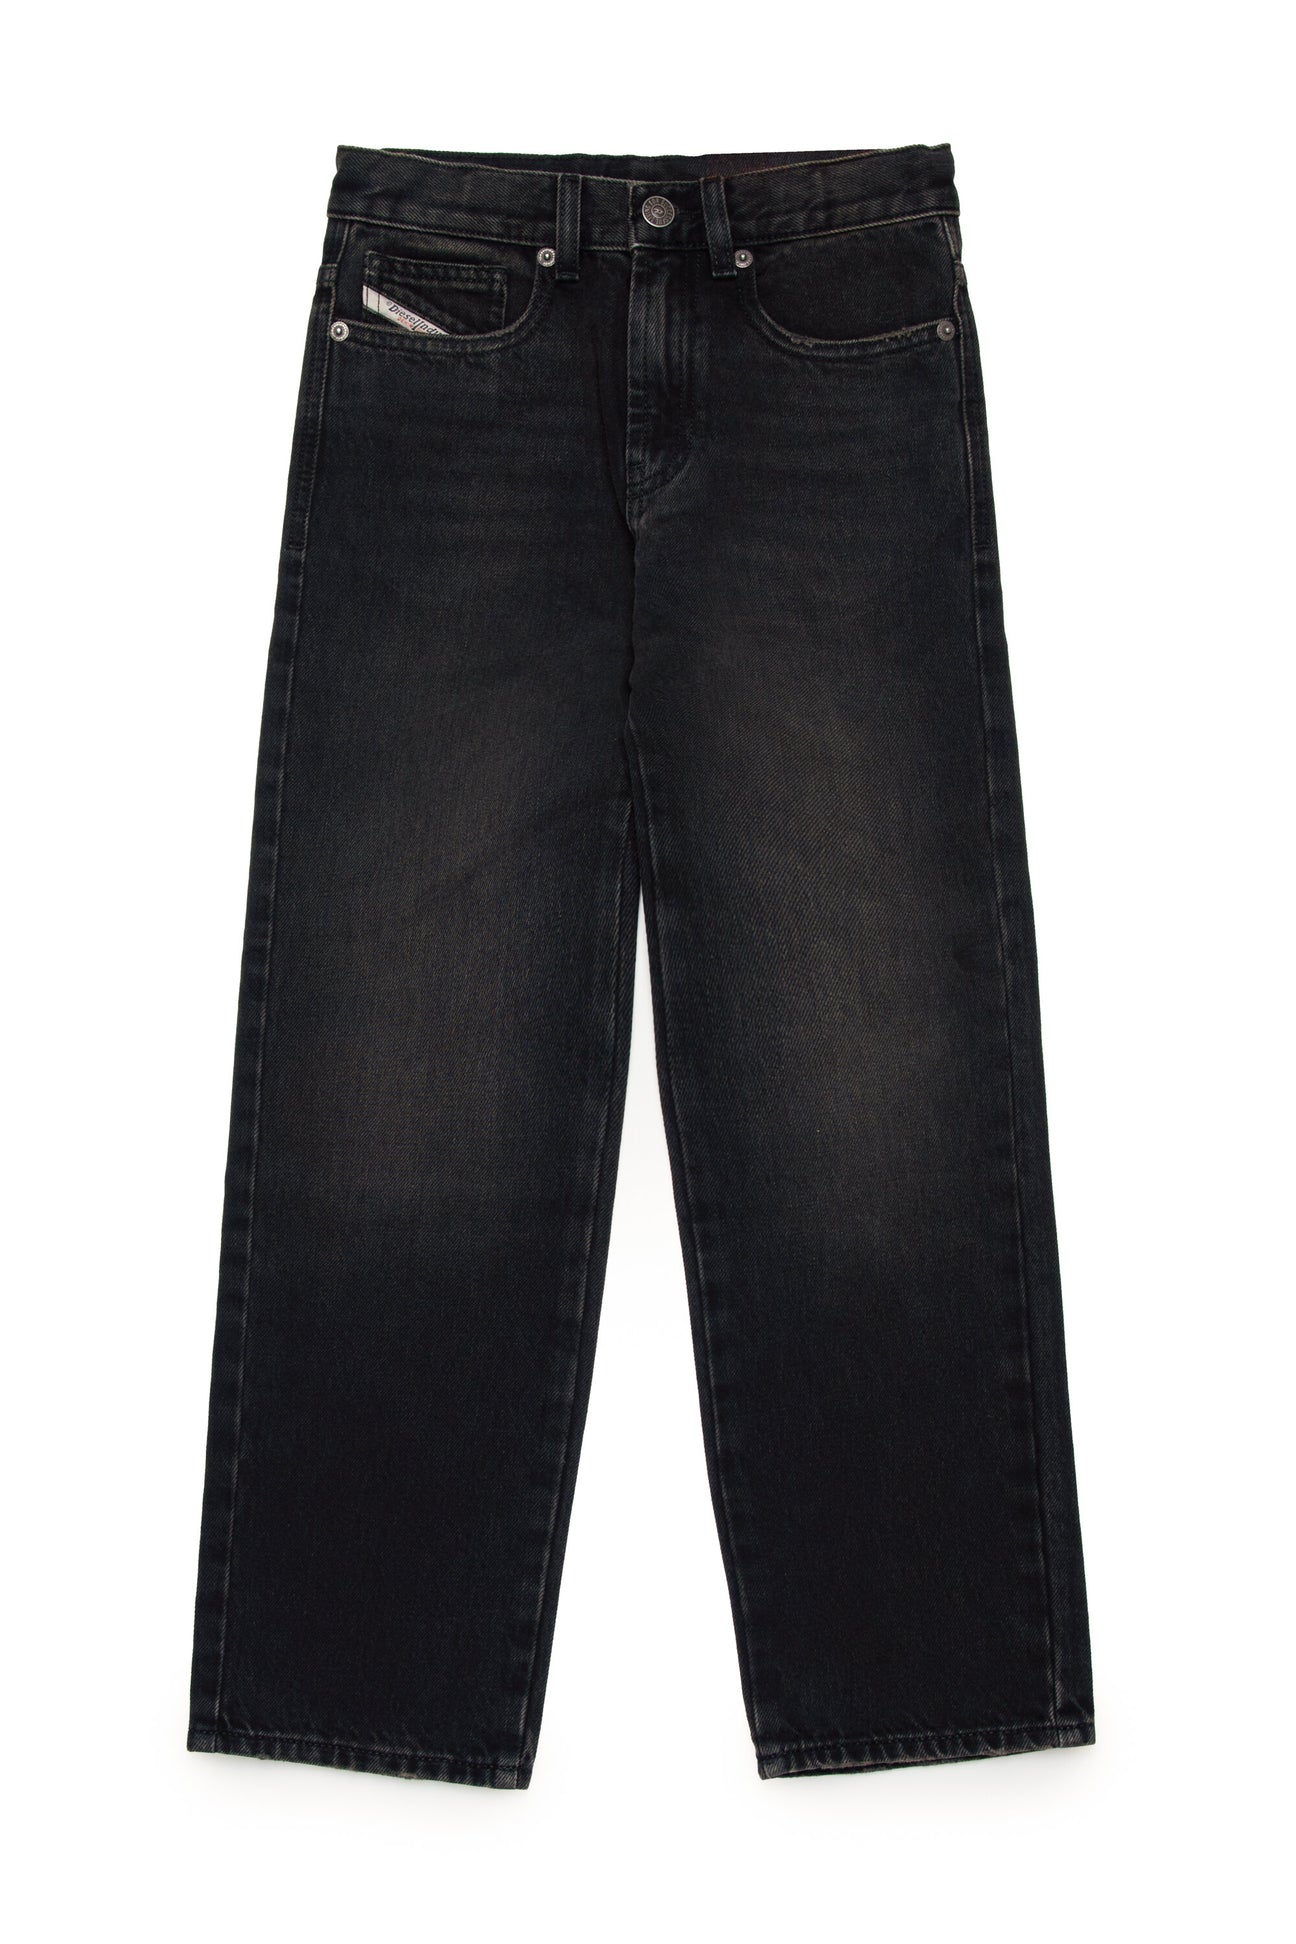 Jeans straight degradado negro - 2001 D-Macro 